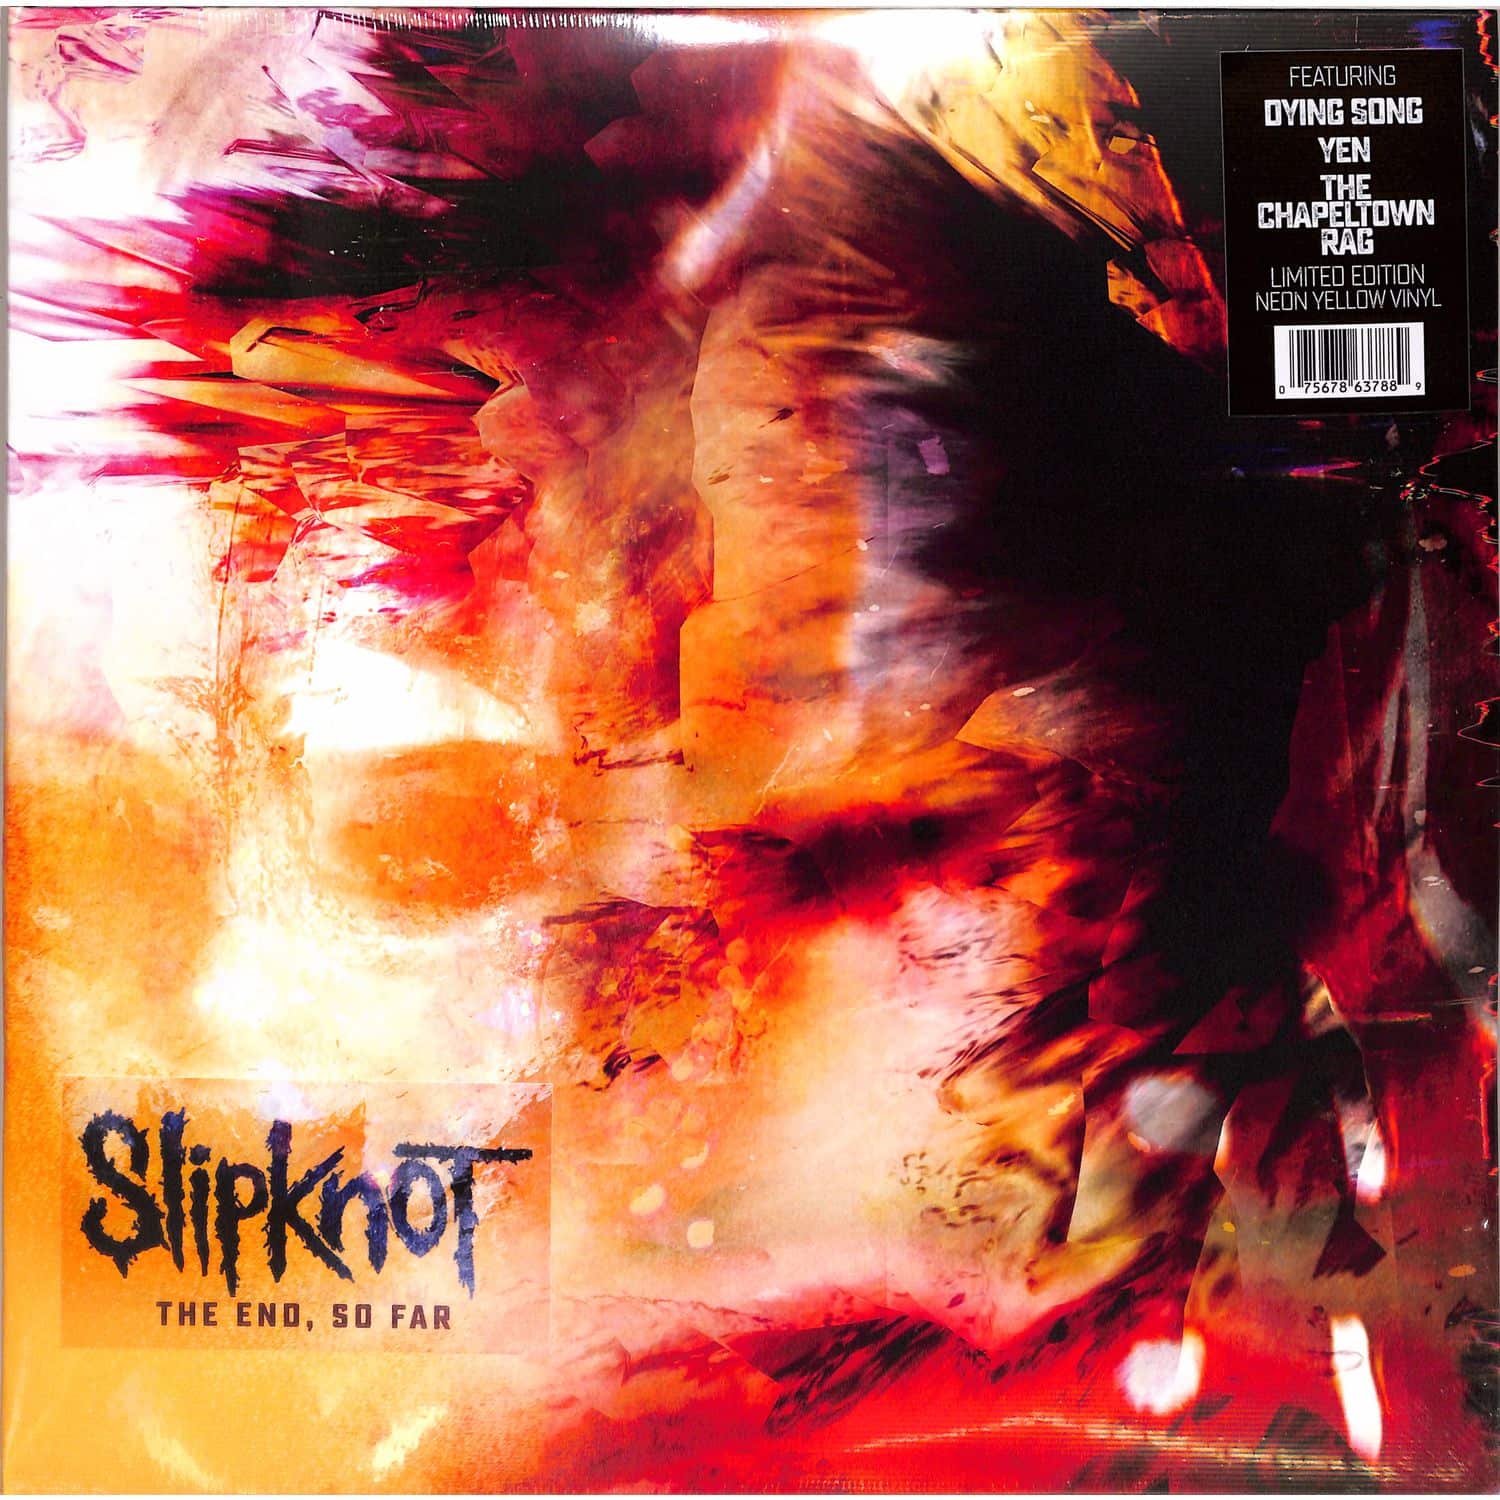 Slipknot the end. Слипкнот the end so far обложка альбома.